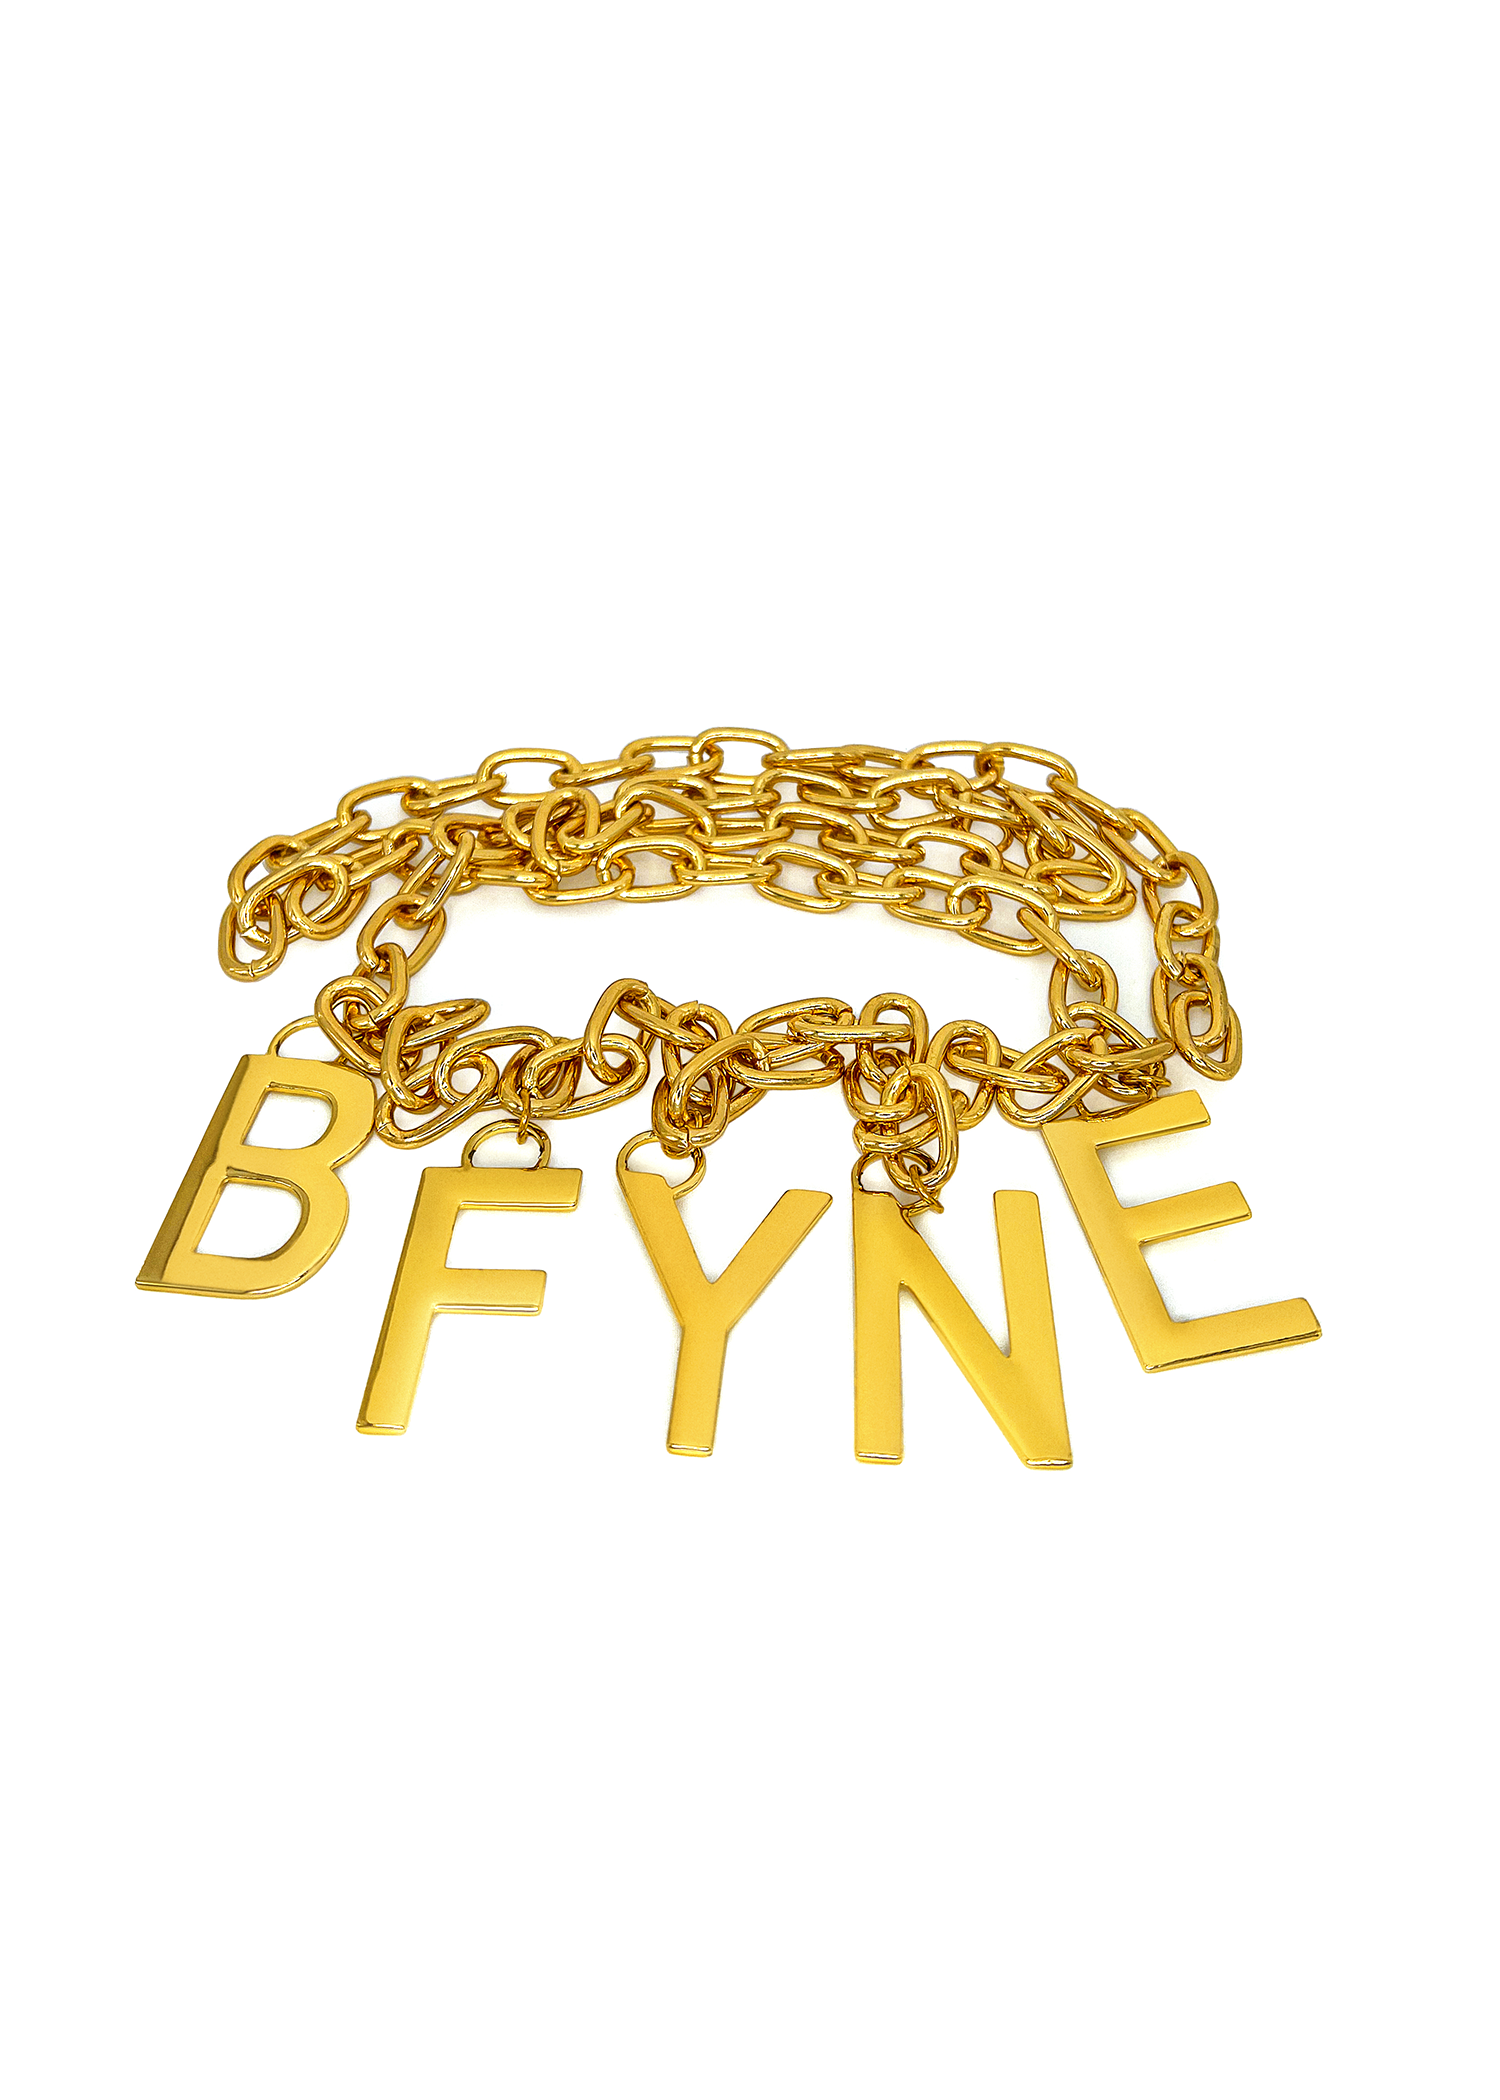 Rose Bfyne Waist chain